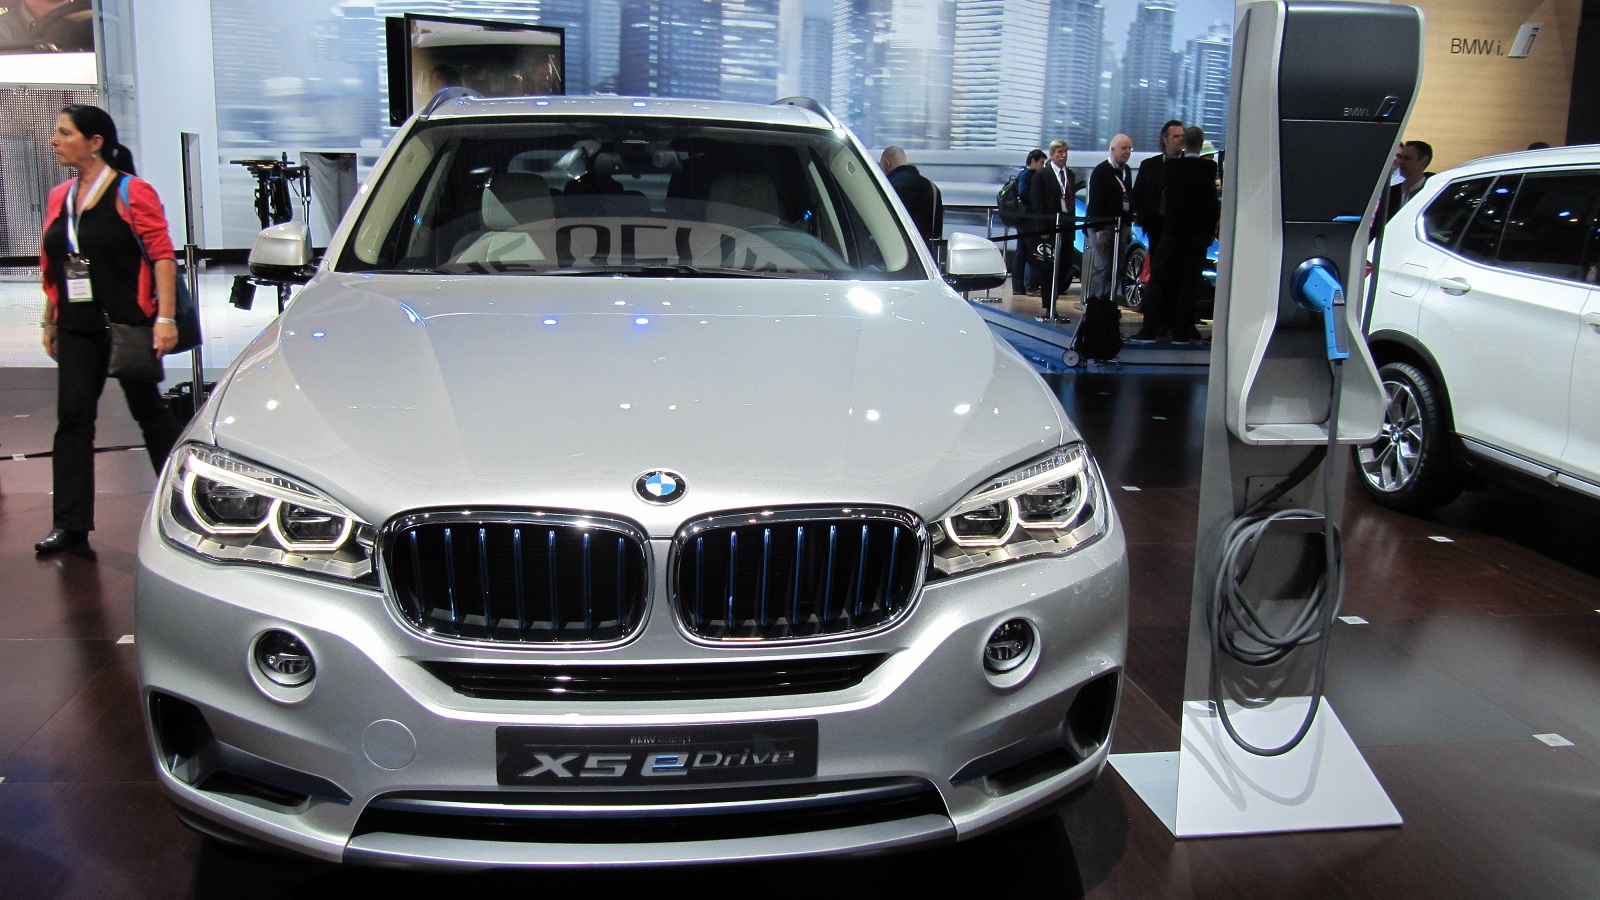 BMW Concept X5 eDrive at 2014 New York Auto Show